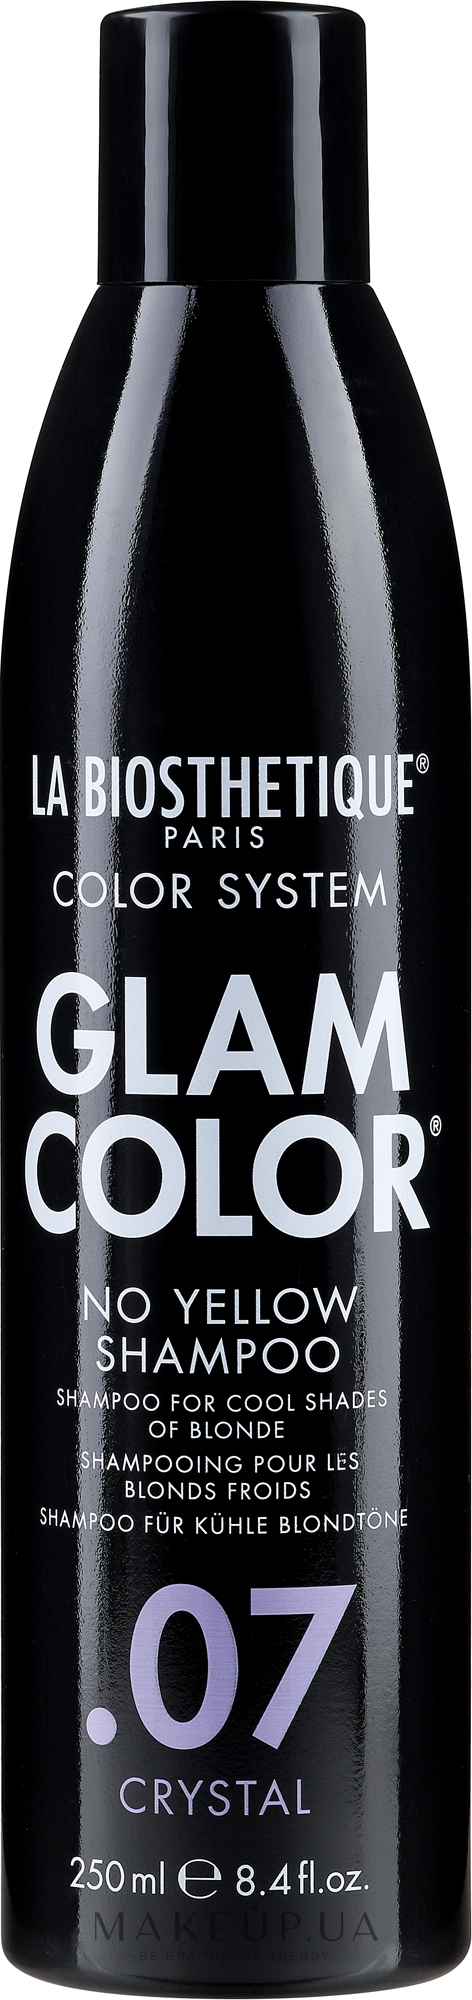 Шампунь для фарбованого волосся - La Biosthetique Glam Color No Yellow Shampoo .07 Crystal — фото 250ml